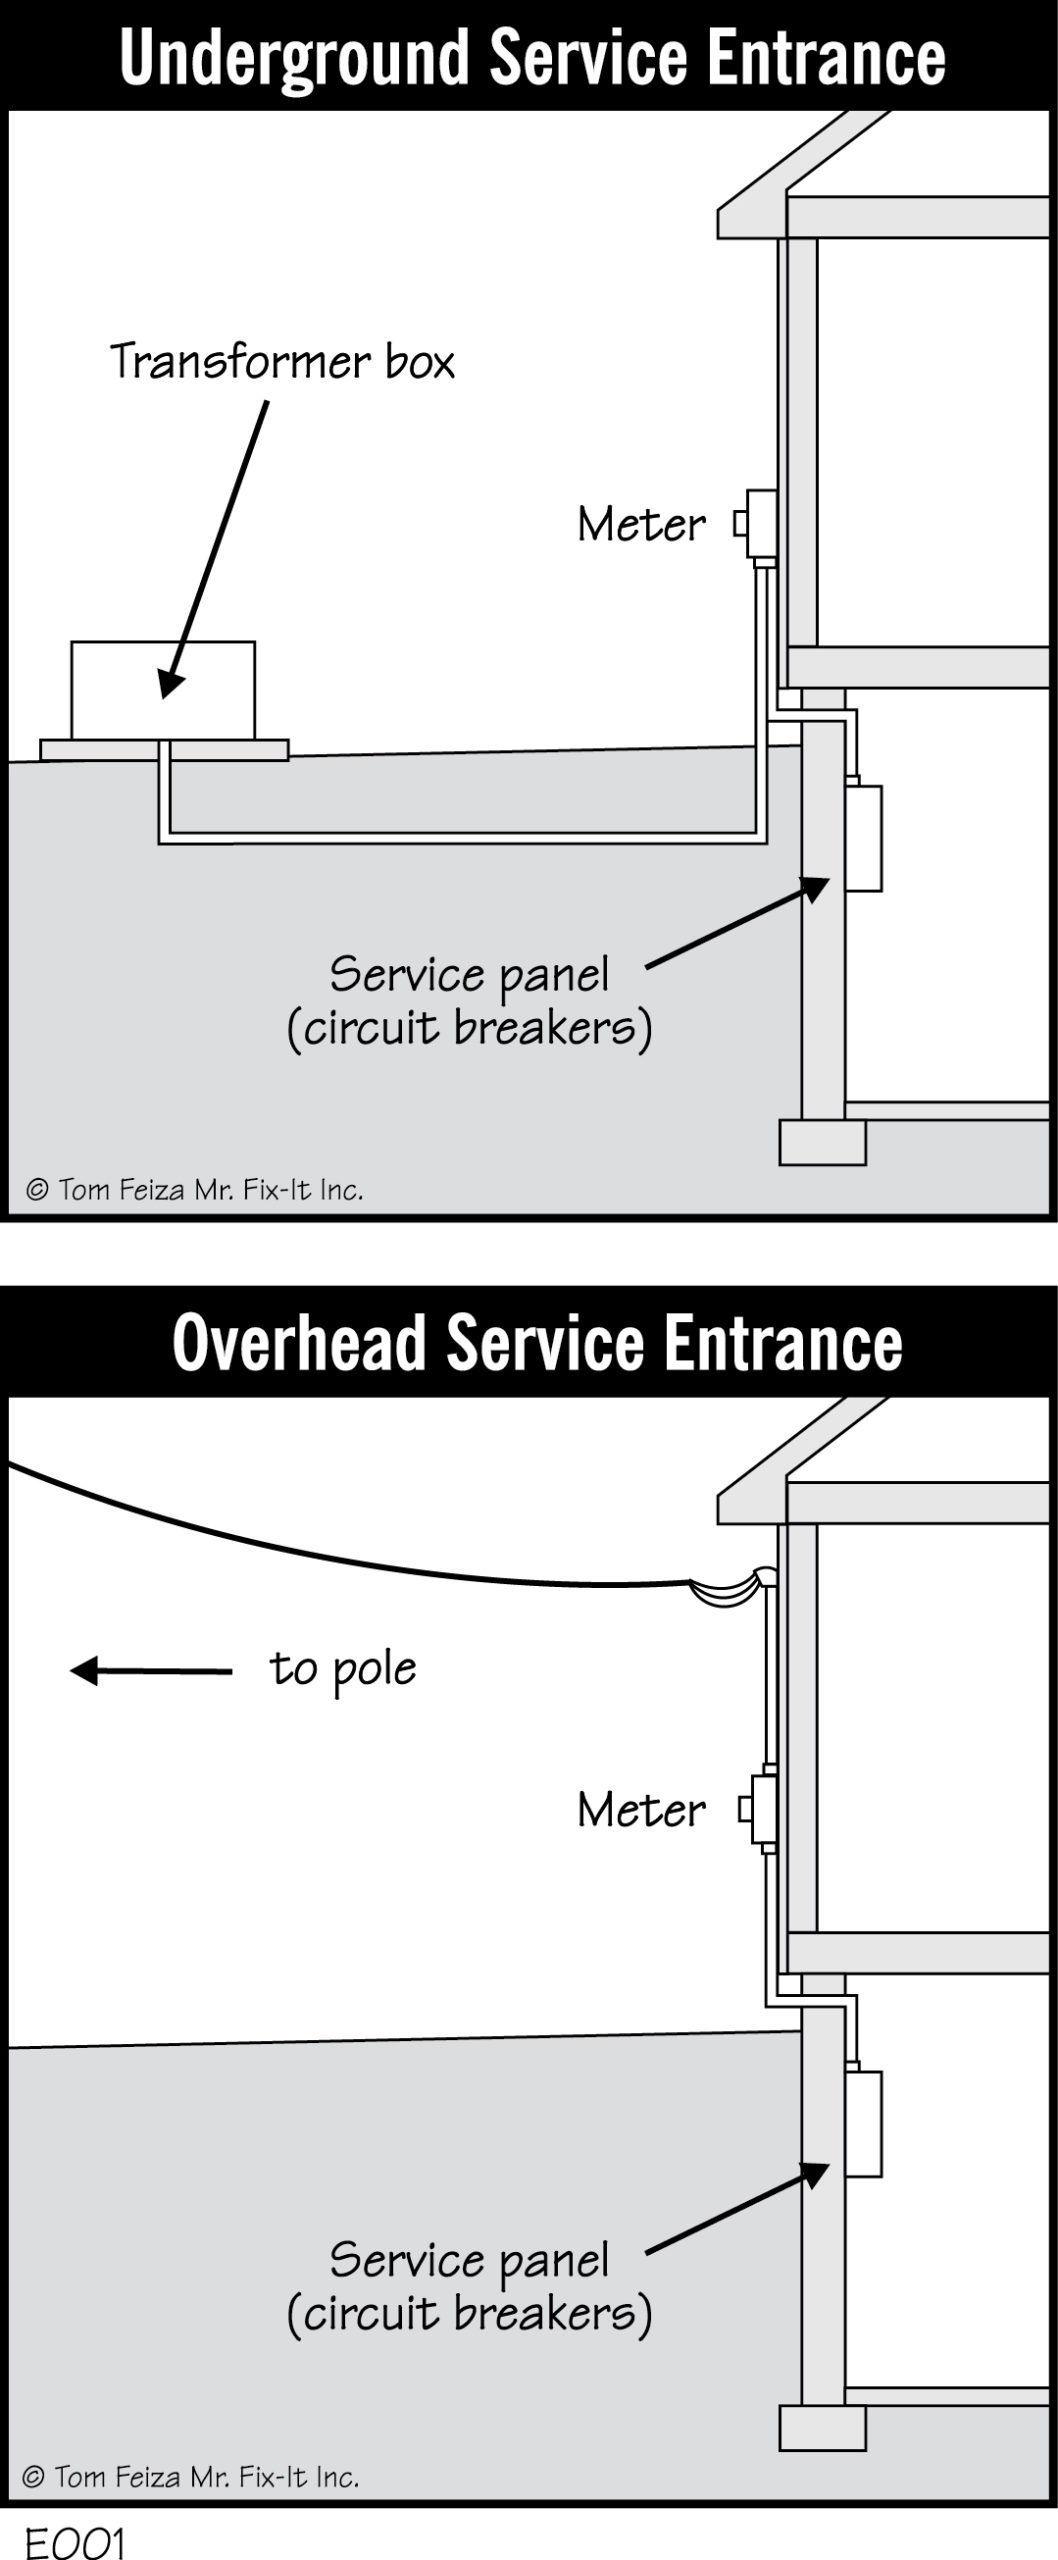 E001 - Underground_Overhead Service Entrance